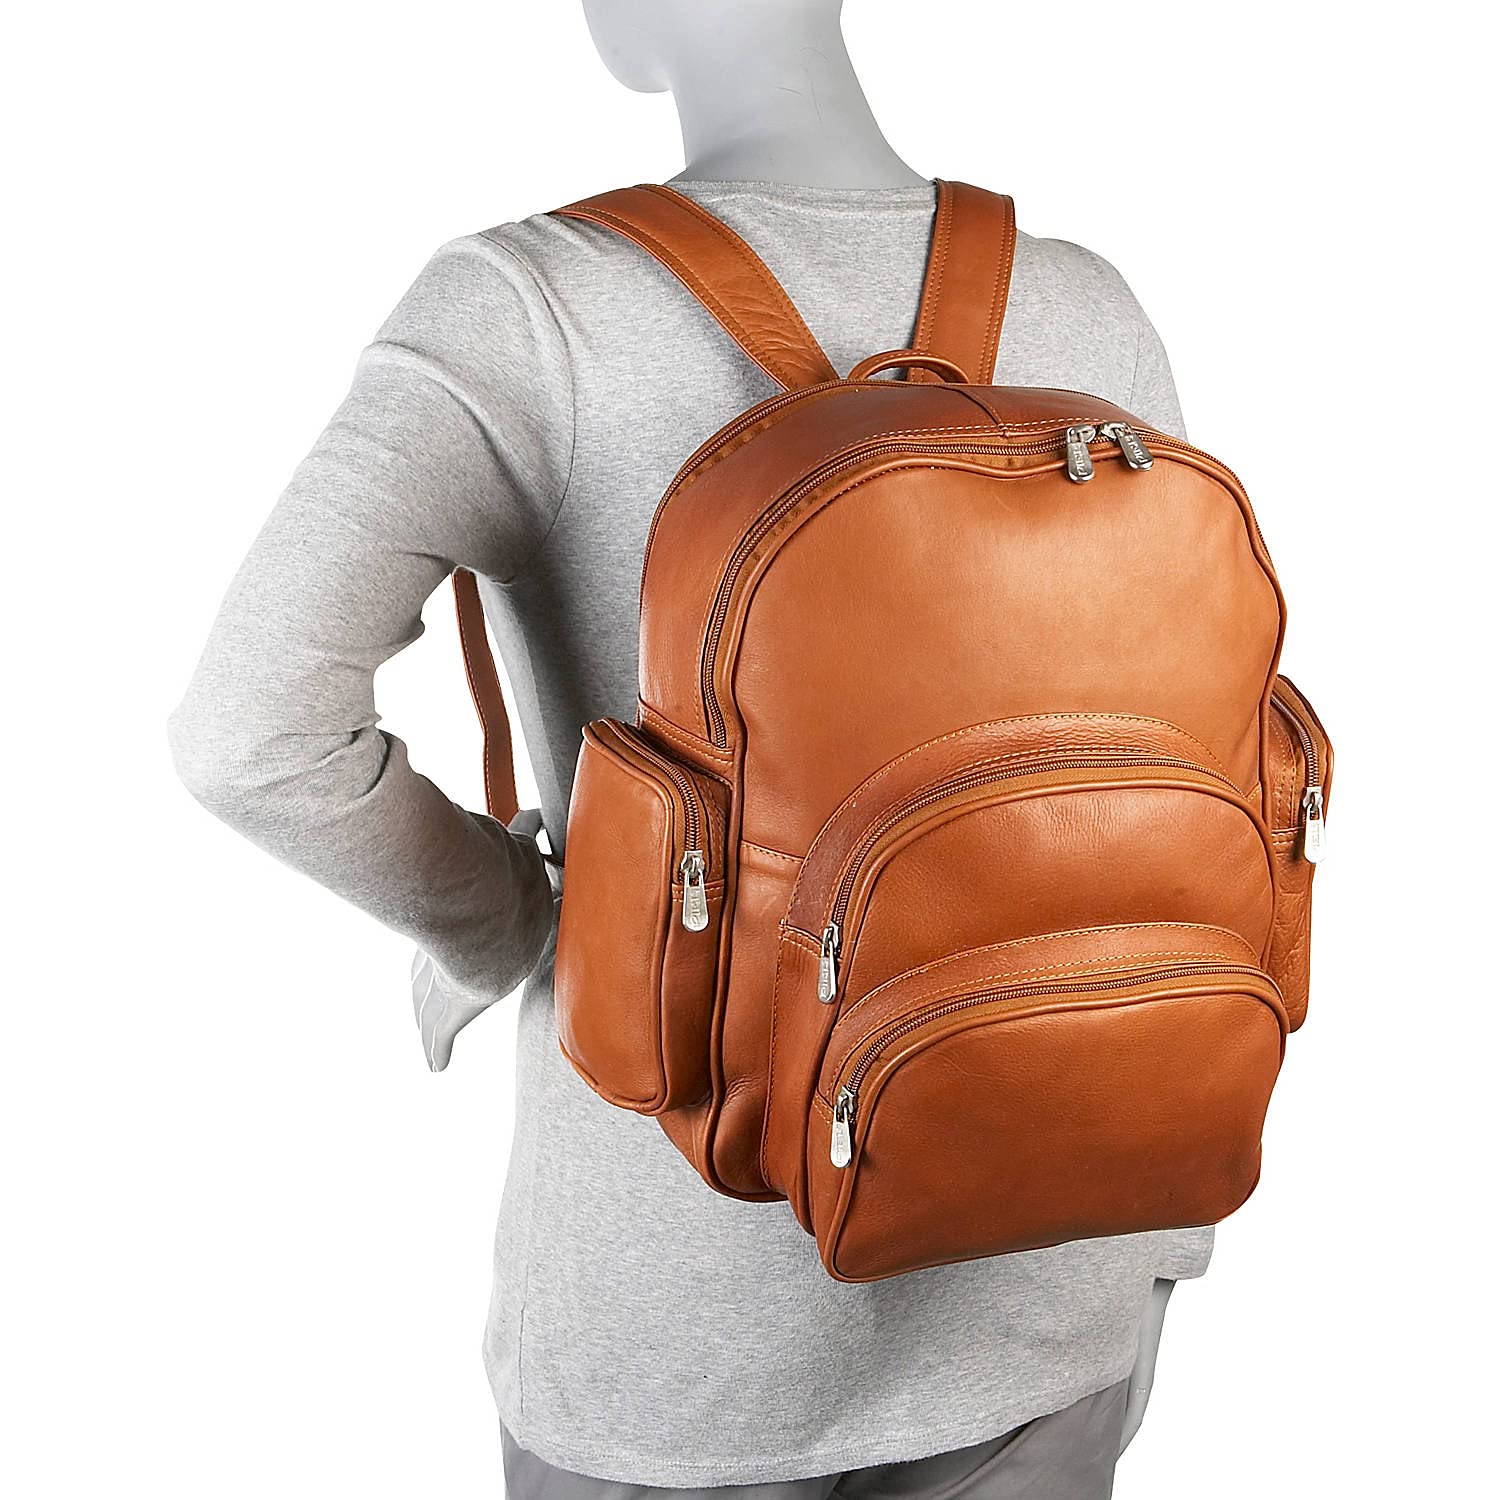 Piel Leather Expandable Backpack, Saddle, One Size